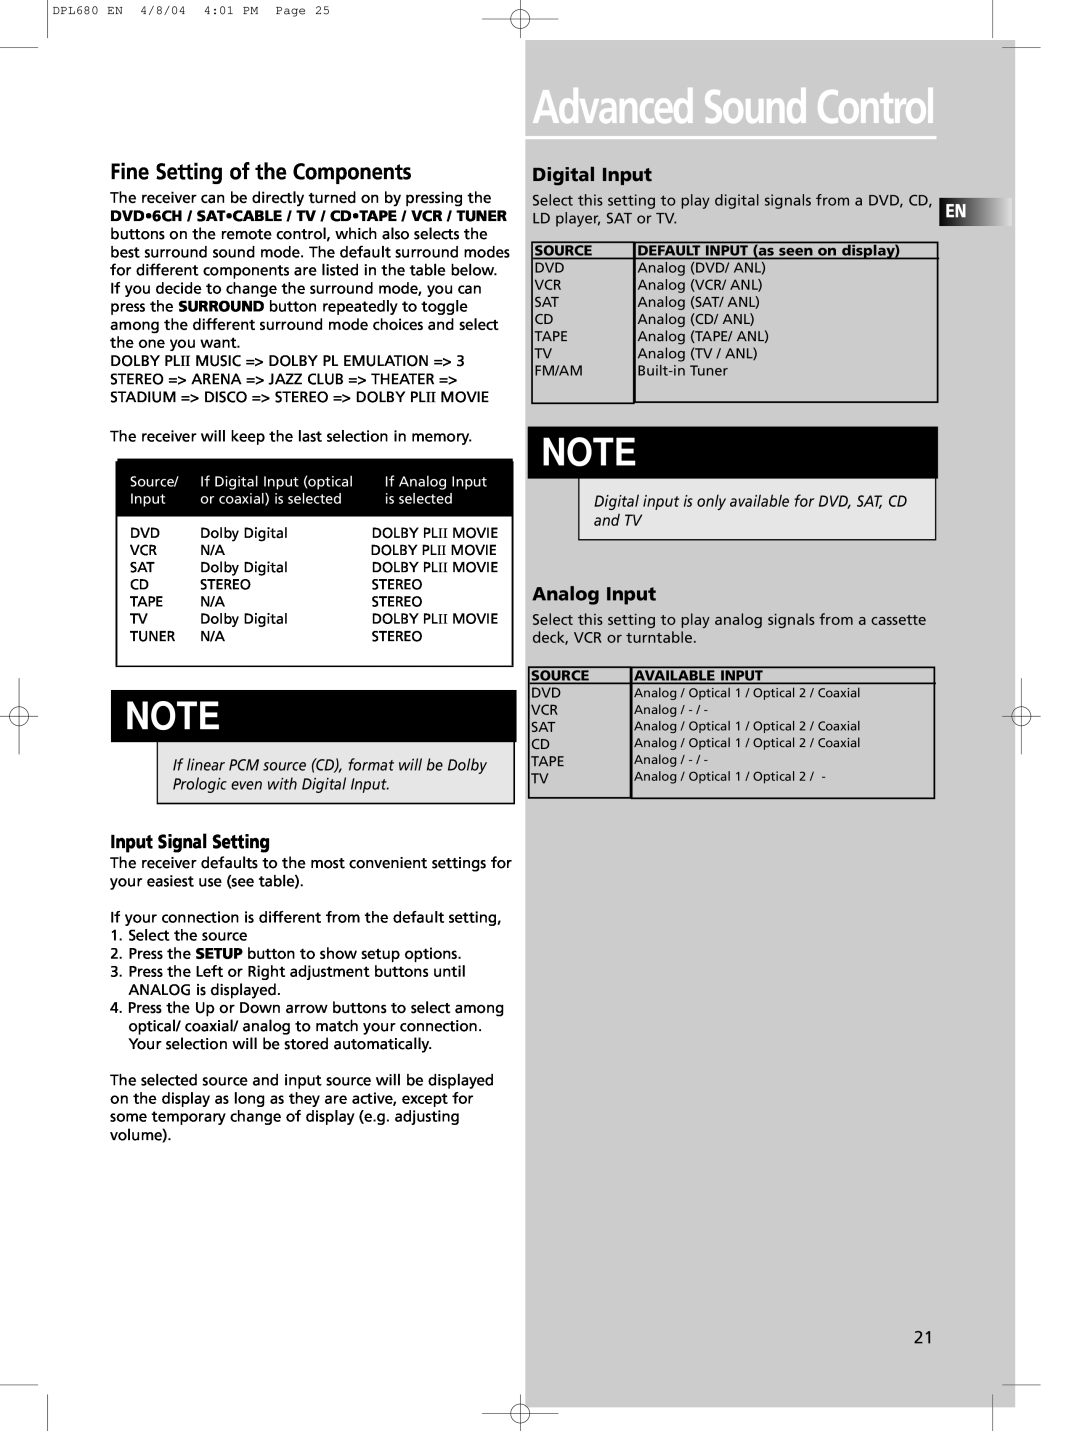 Technicolor - Thomson DPL680 manual Fine Setting of the Components, Digital Input, Analog Input, Input Signal Setting 